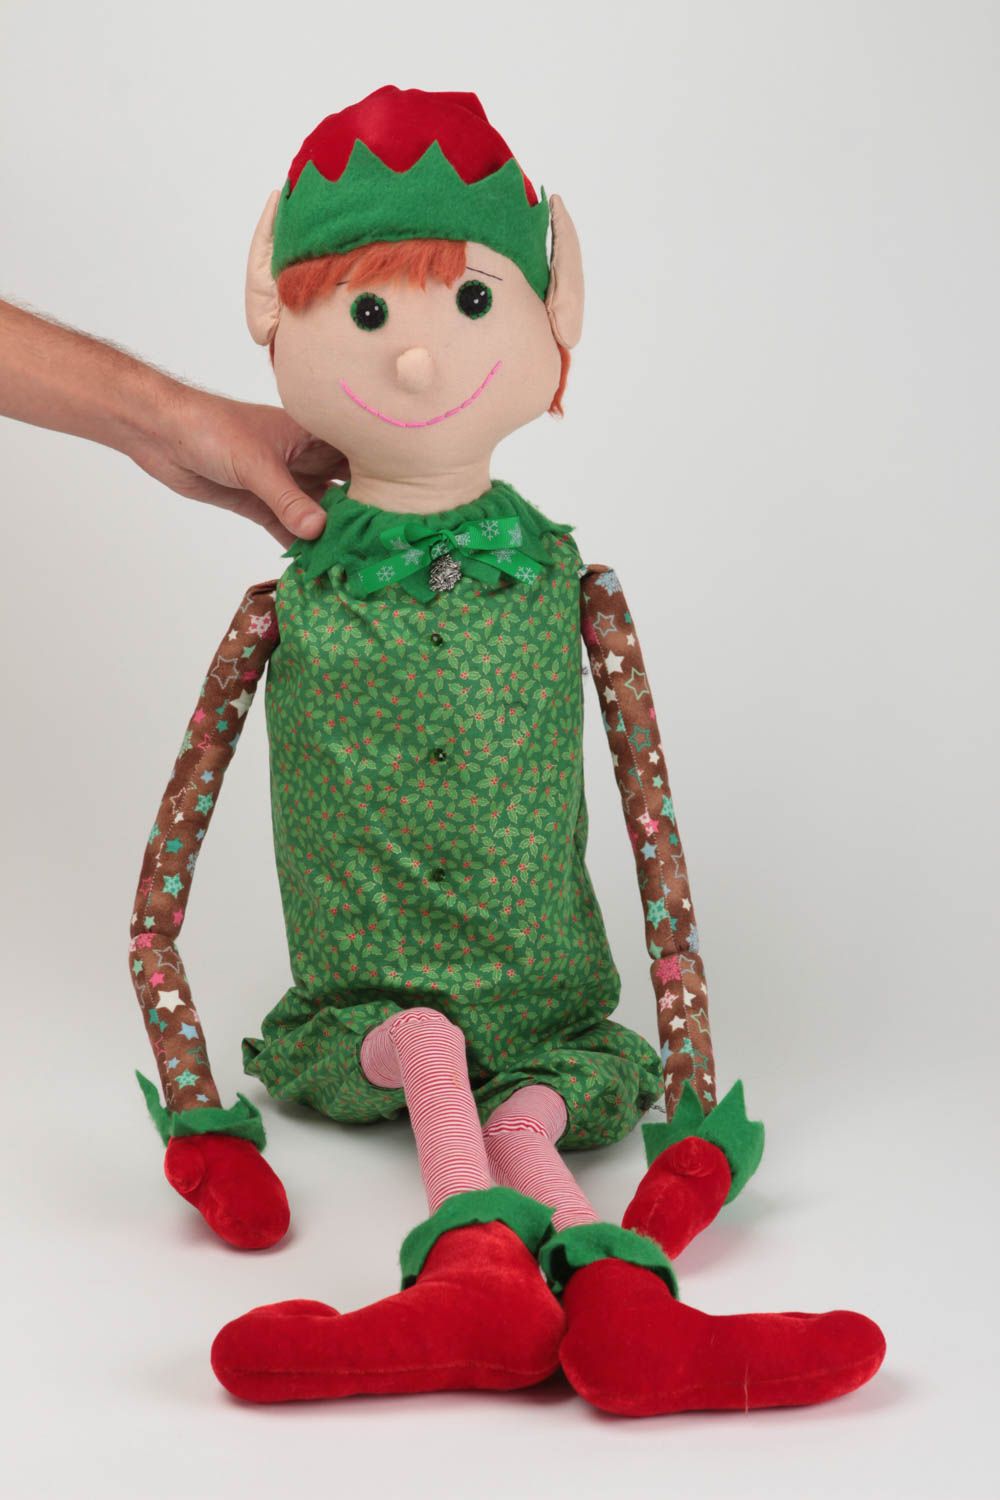 Handmade soft toy interior rag doll interior decorating gift ideas for kids photo 5